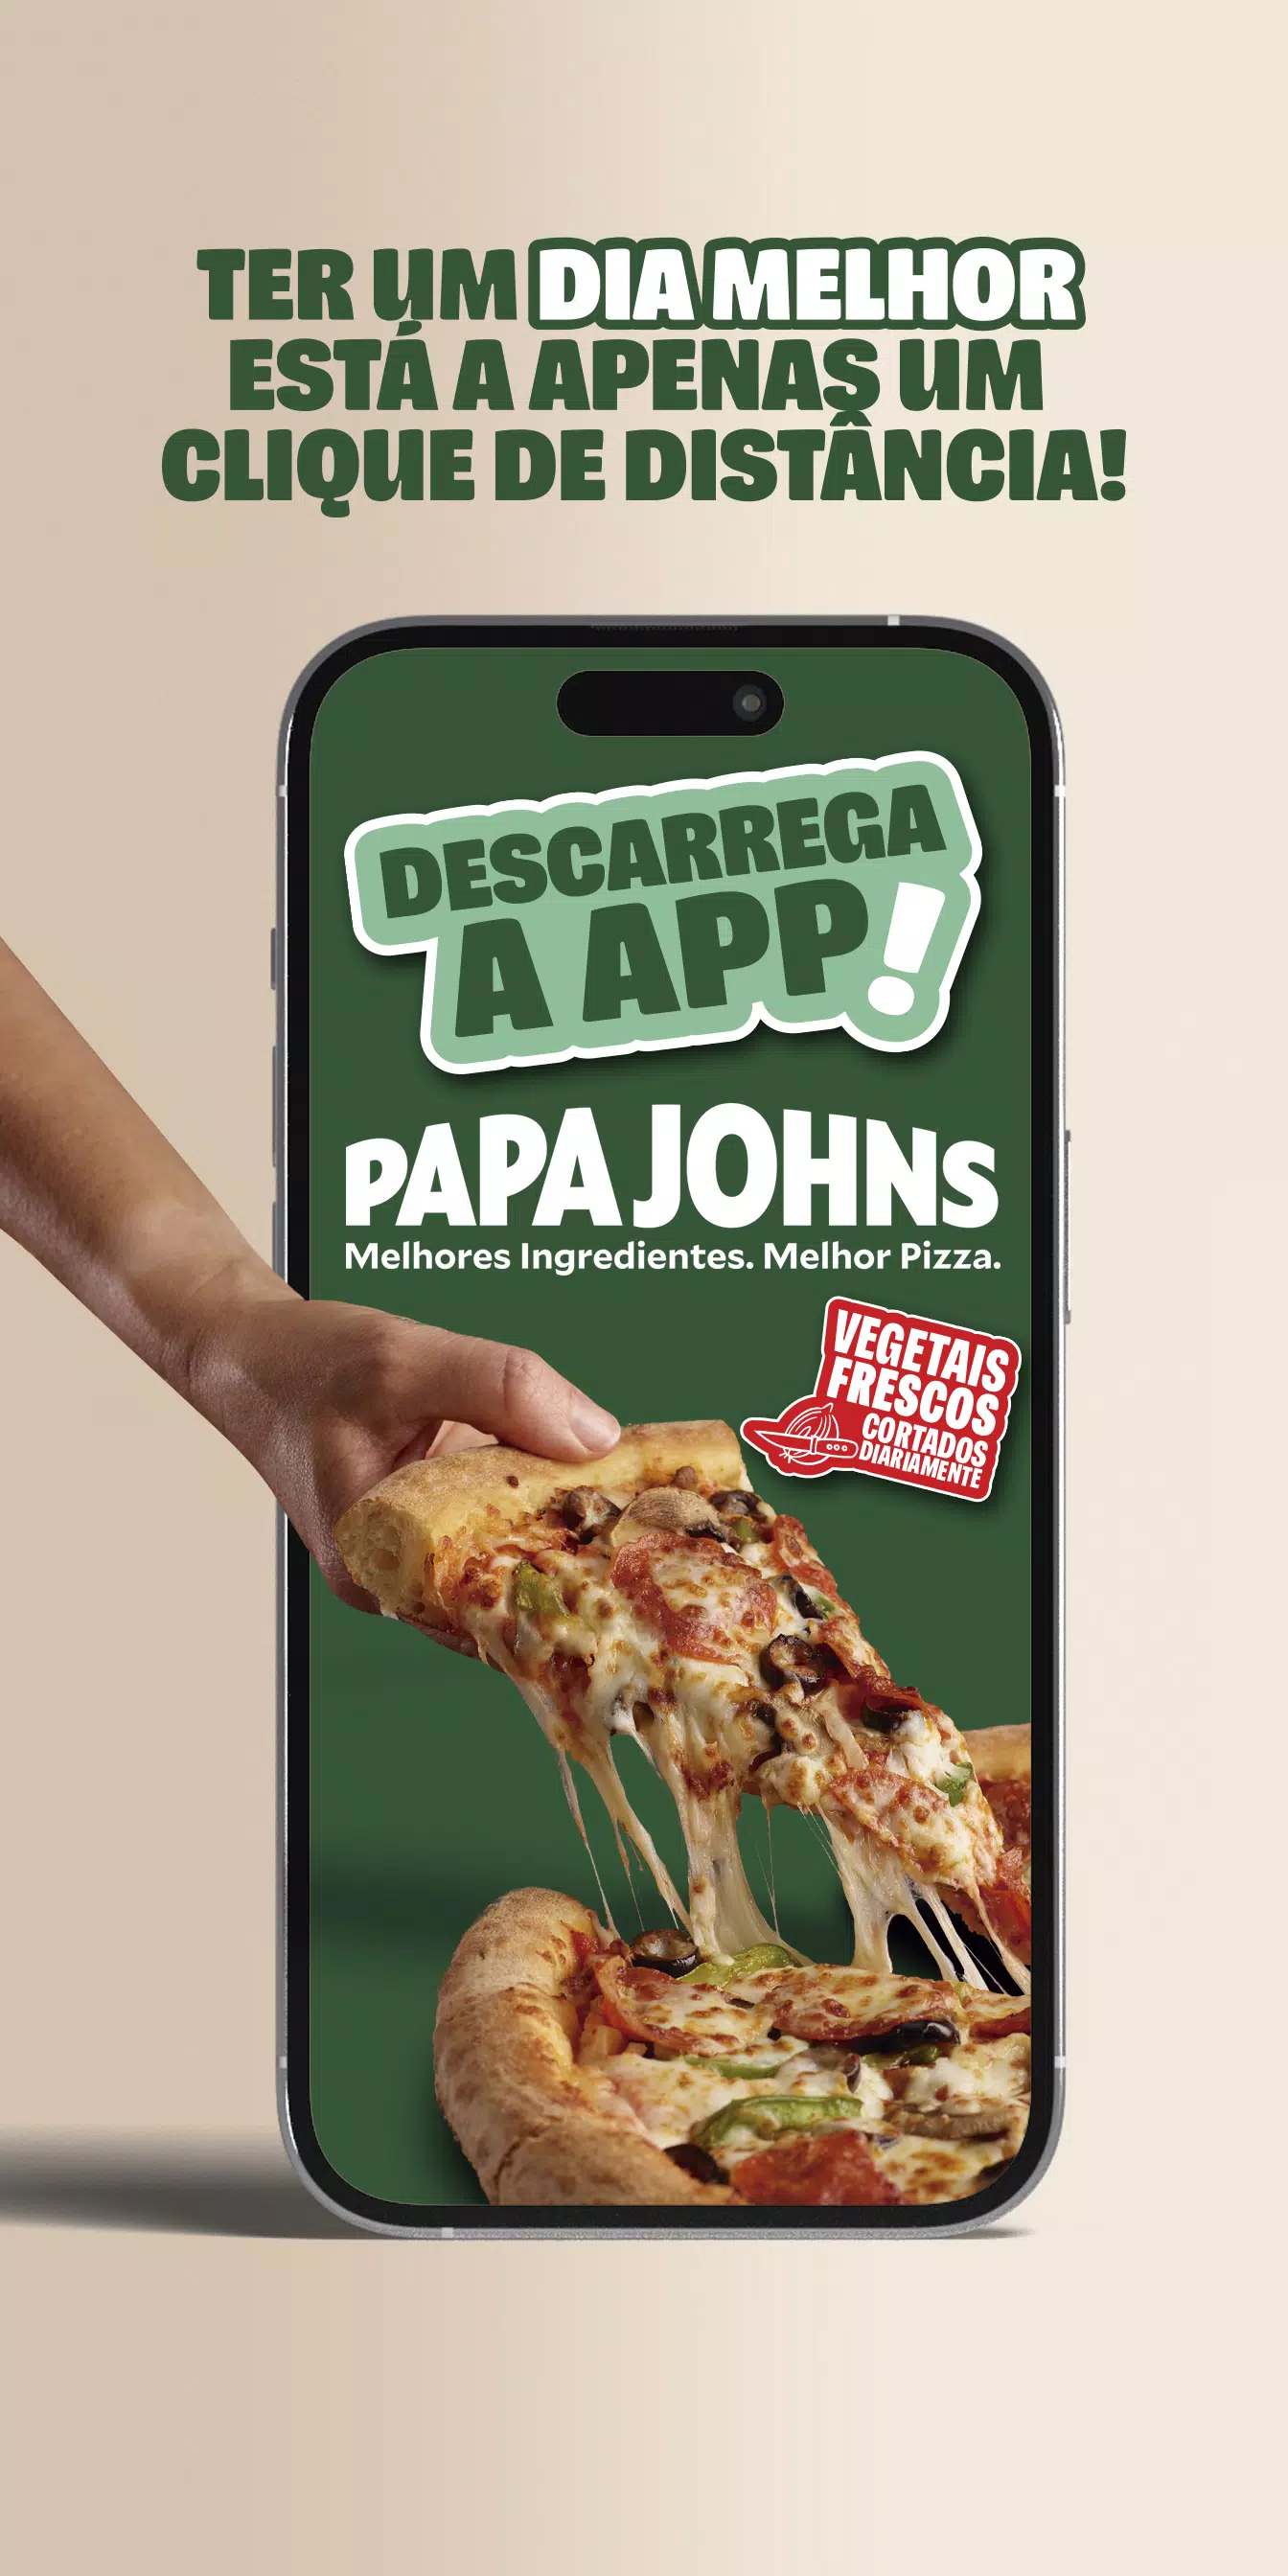 Download do APK de PaPa Pizza para Android